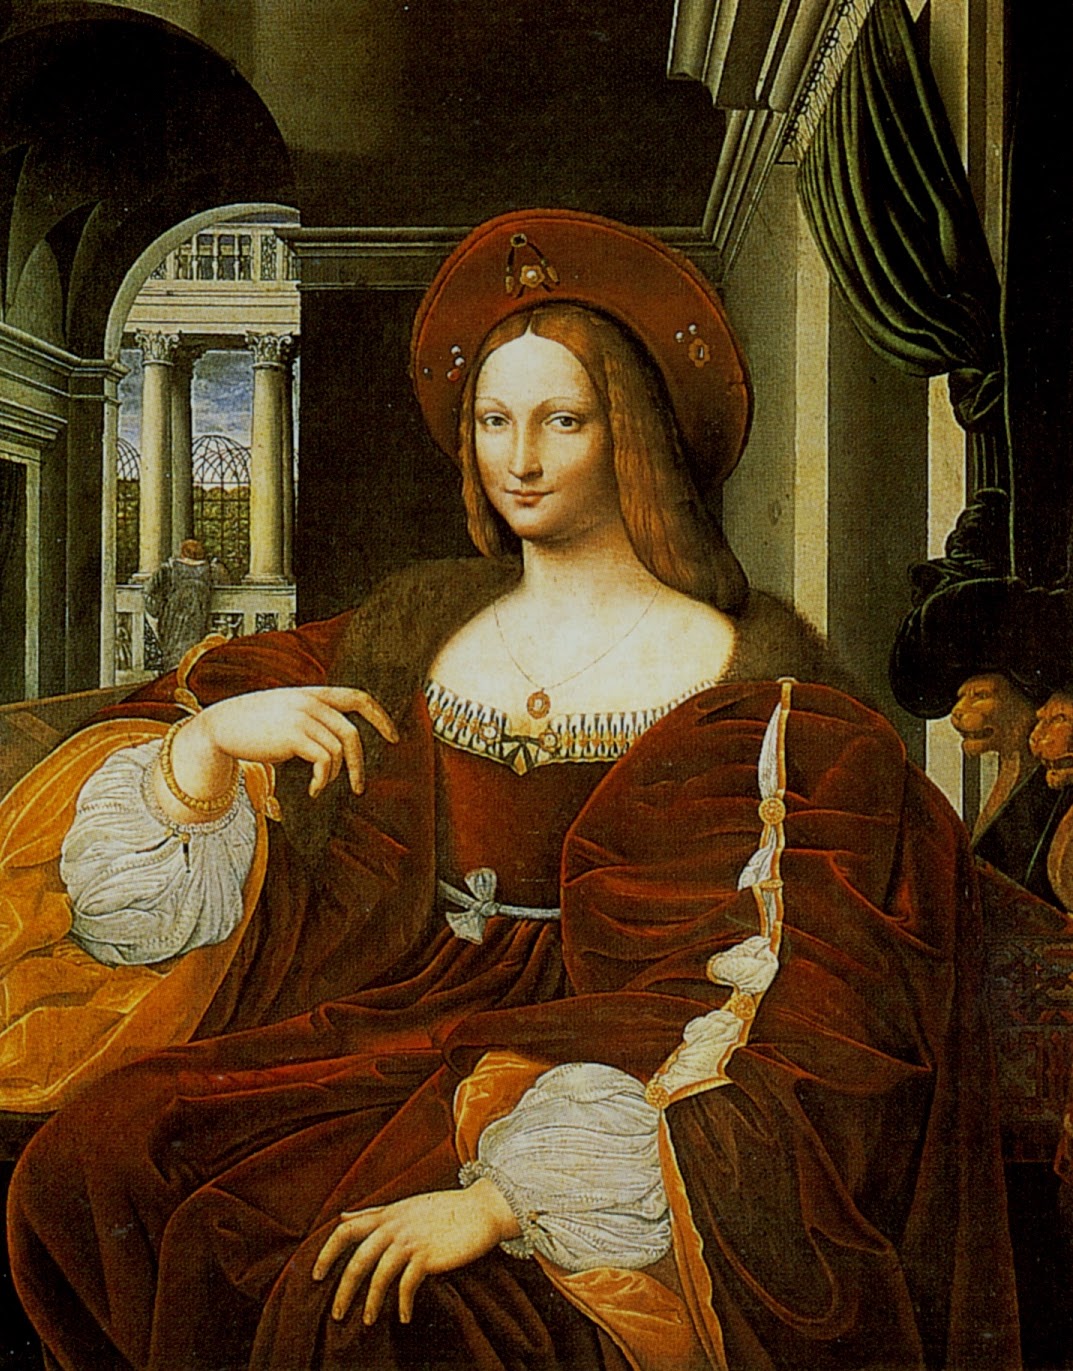 Leonardo+da+Vinci-1452-1519 (268).jpg